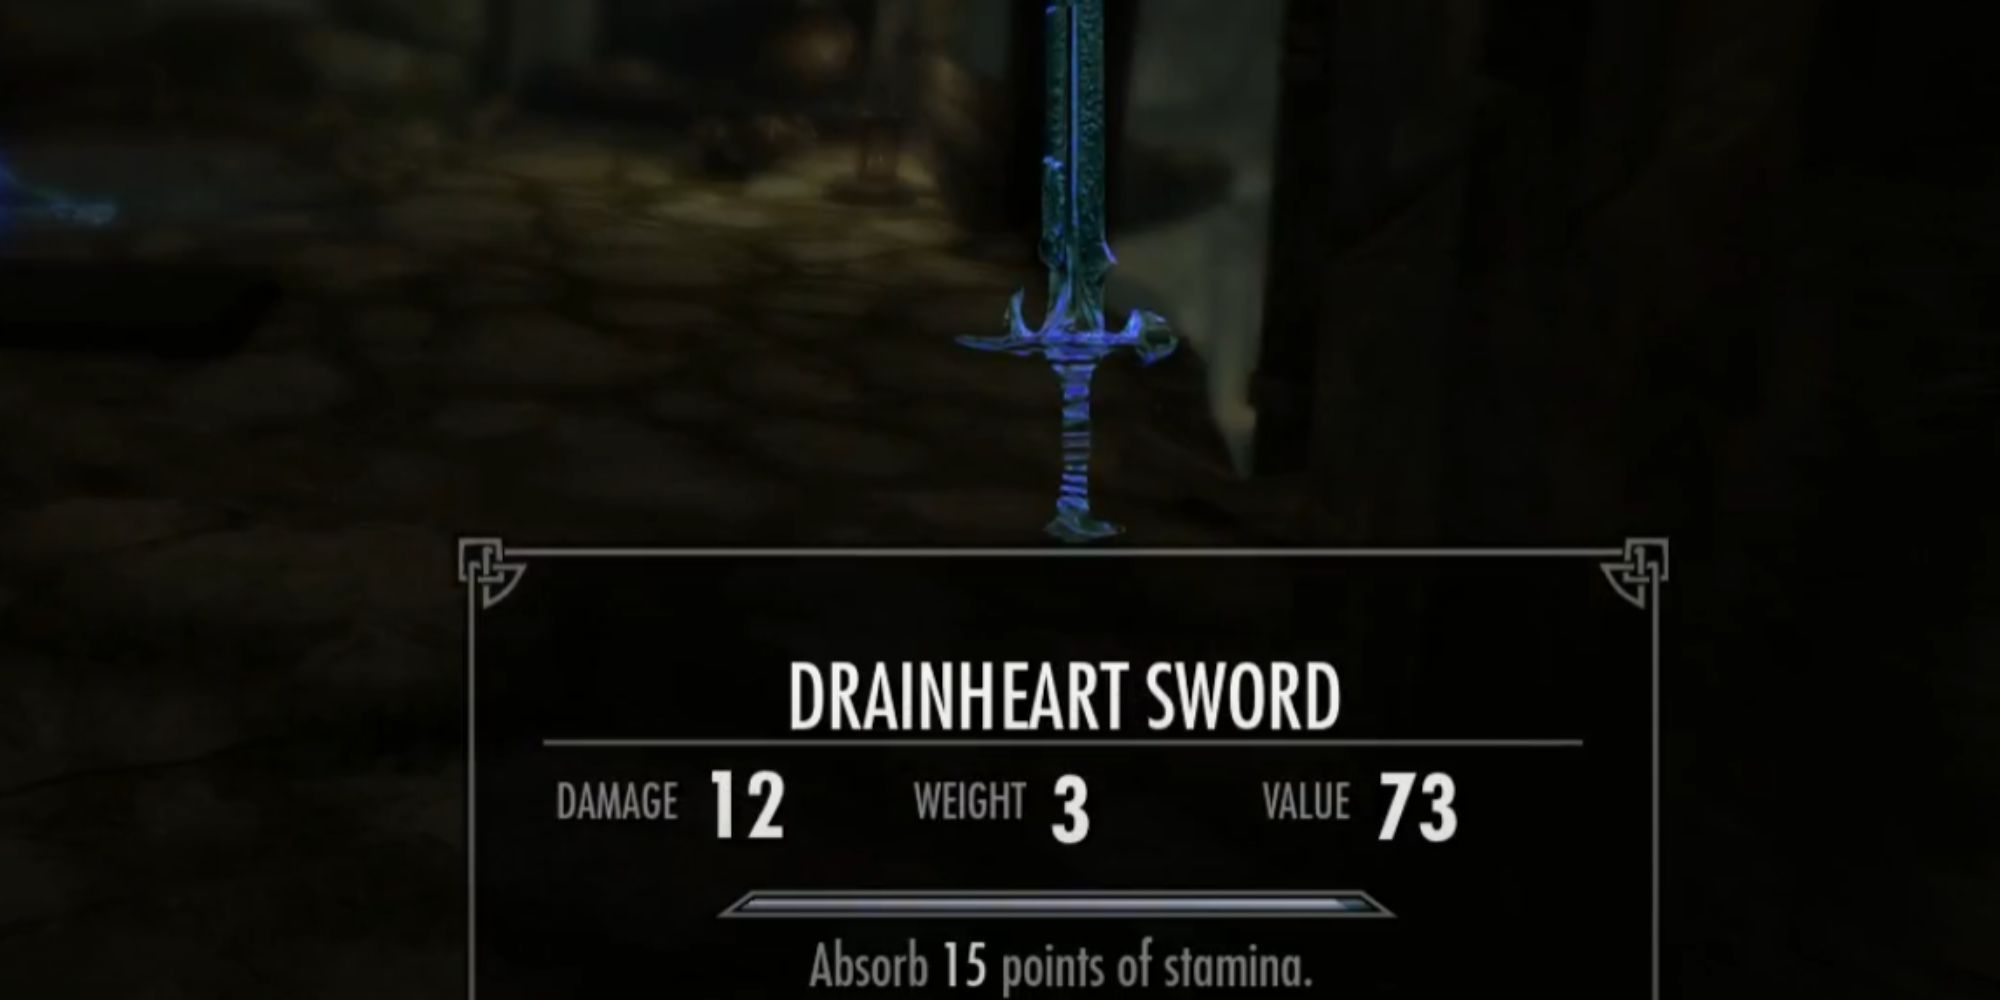 The Drainheart Sword in Skyrim